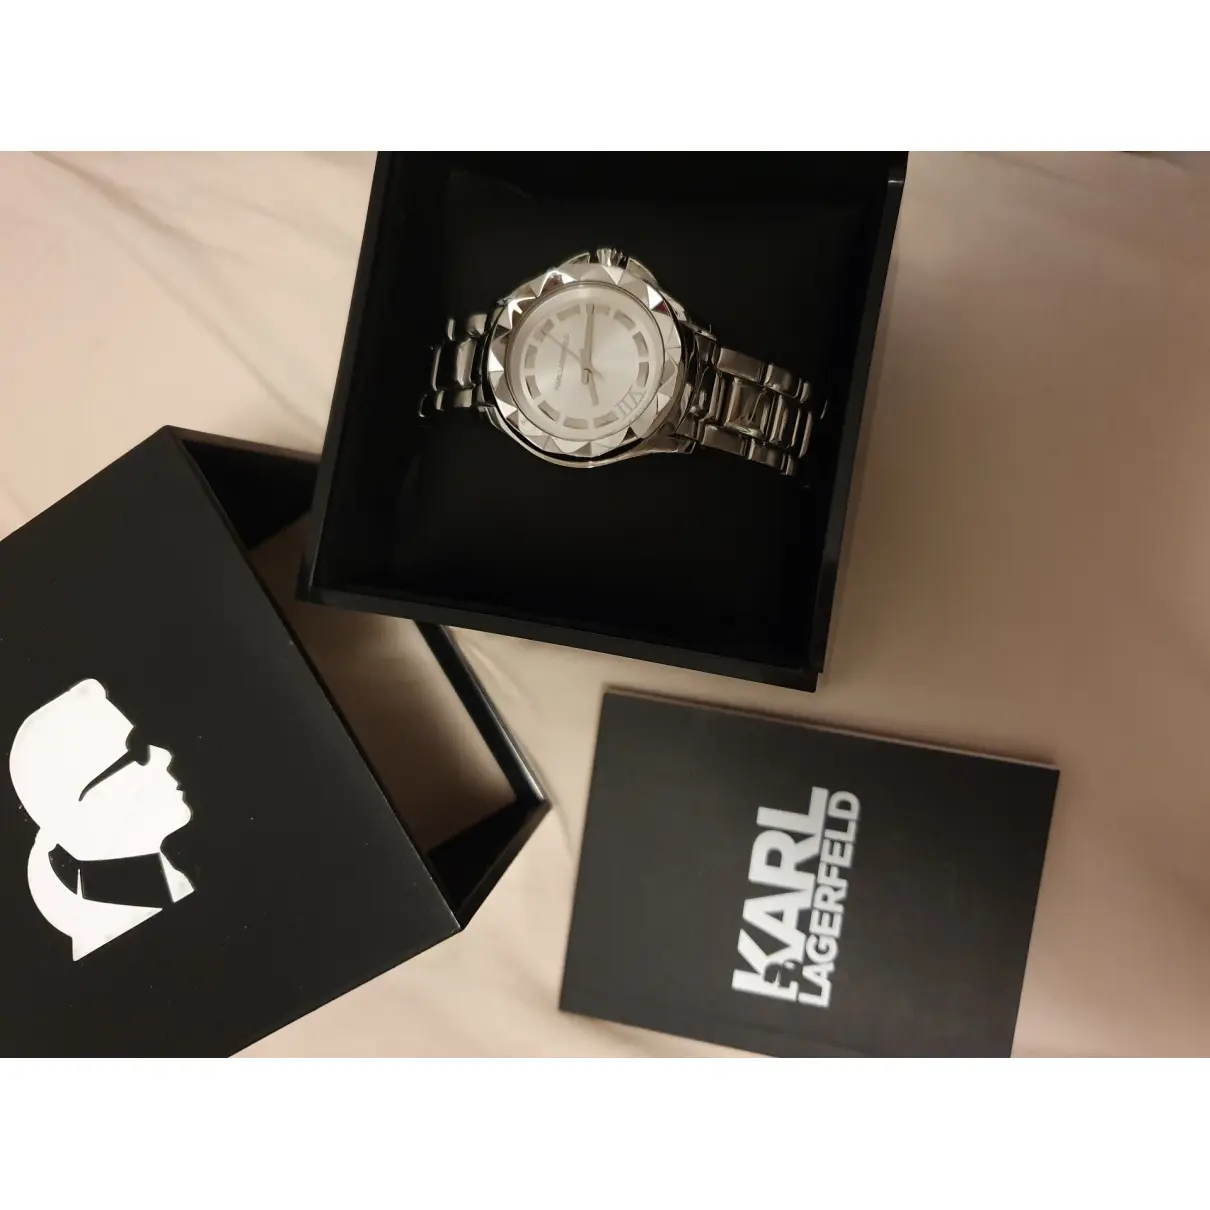 Buy Karl Lagerfeld Watch online